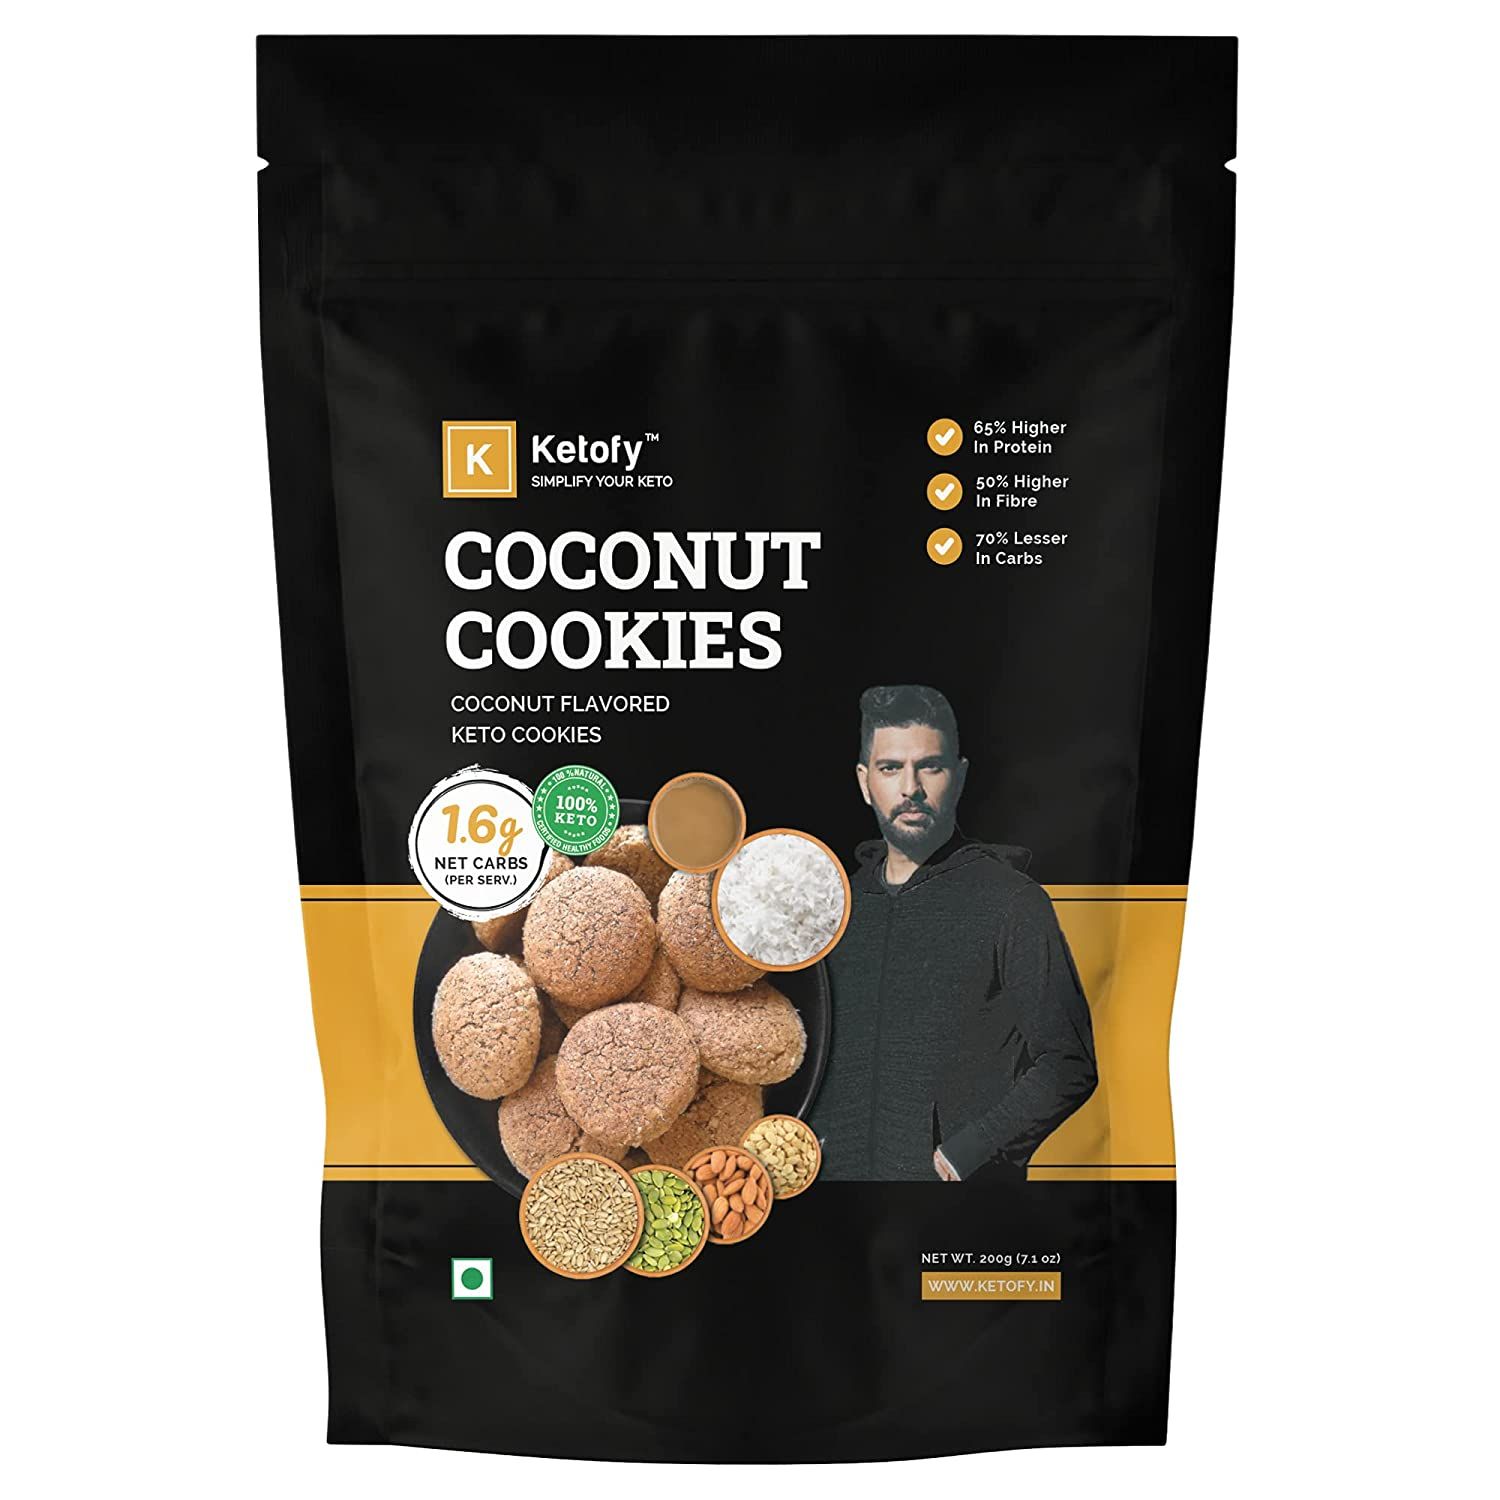 Ketofy Coconut Cookies Image